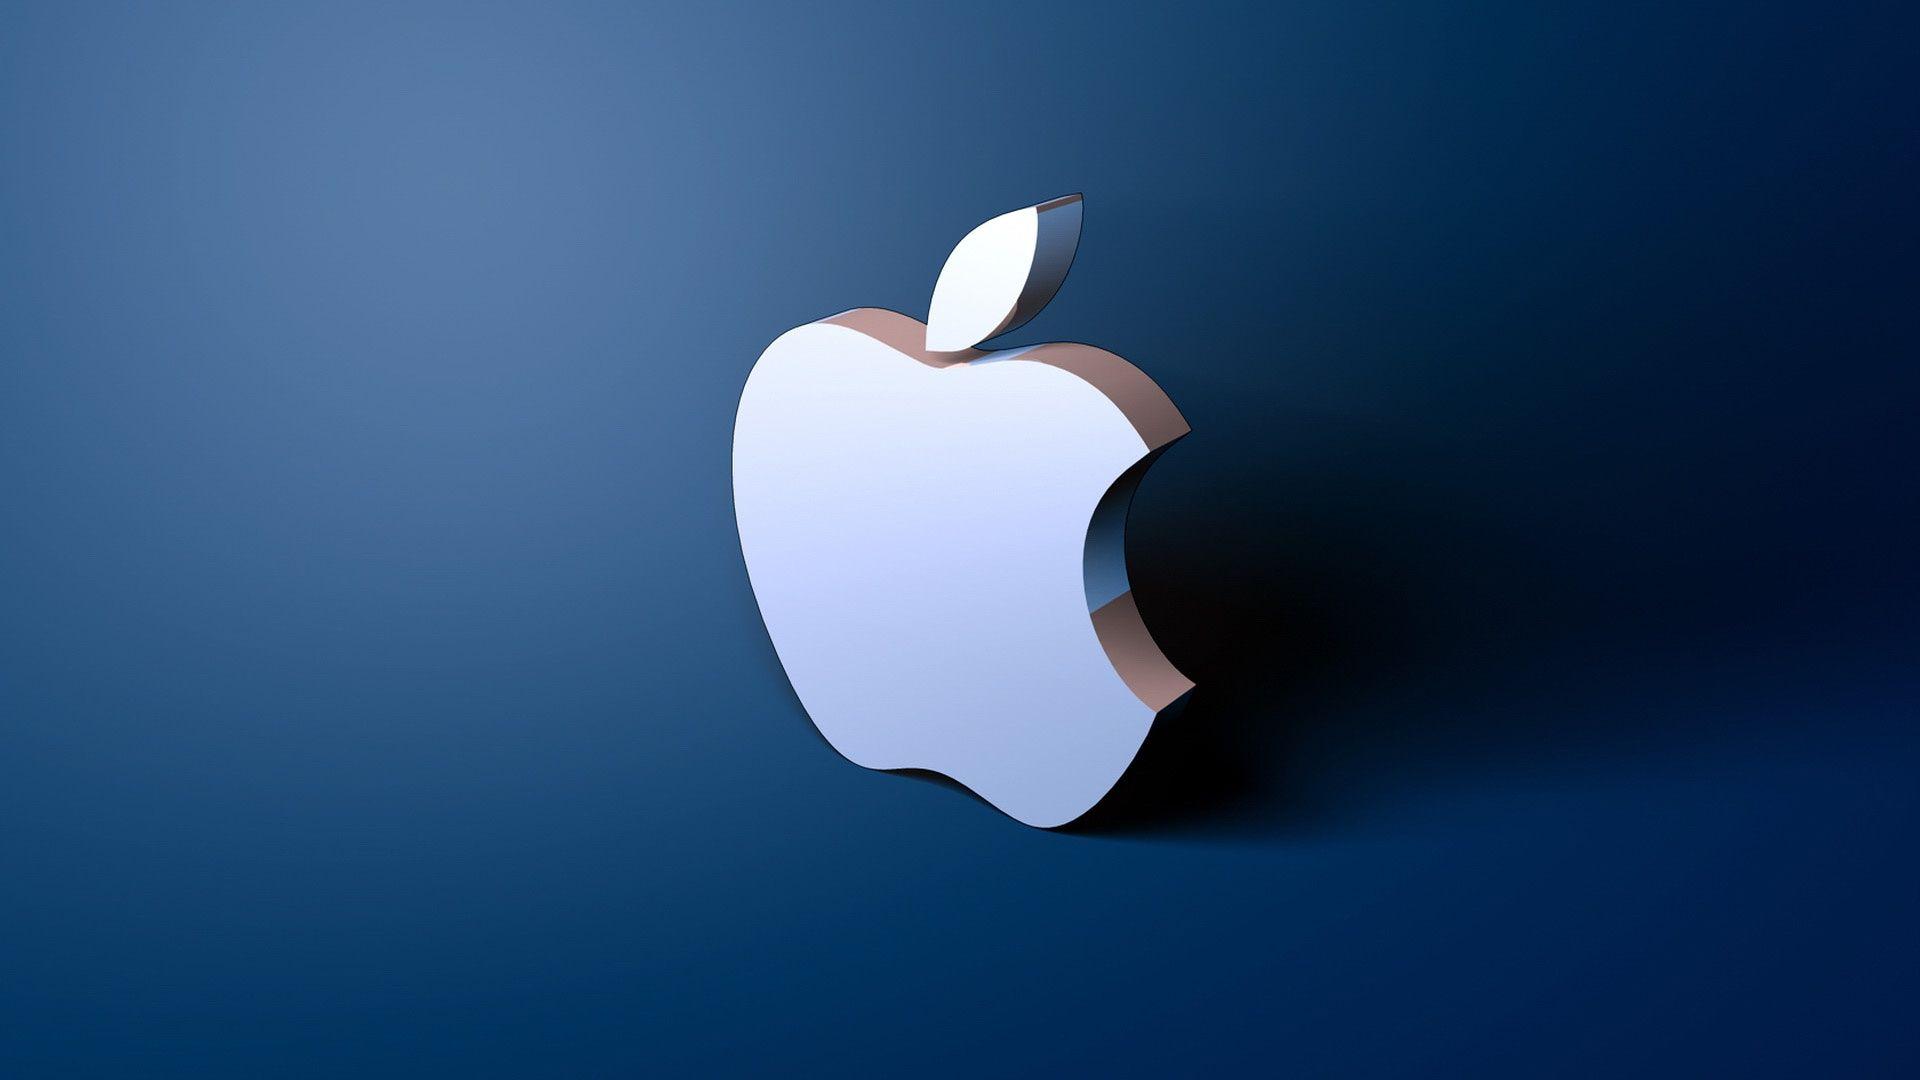 HD Apple 3D Background